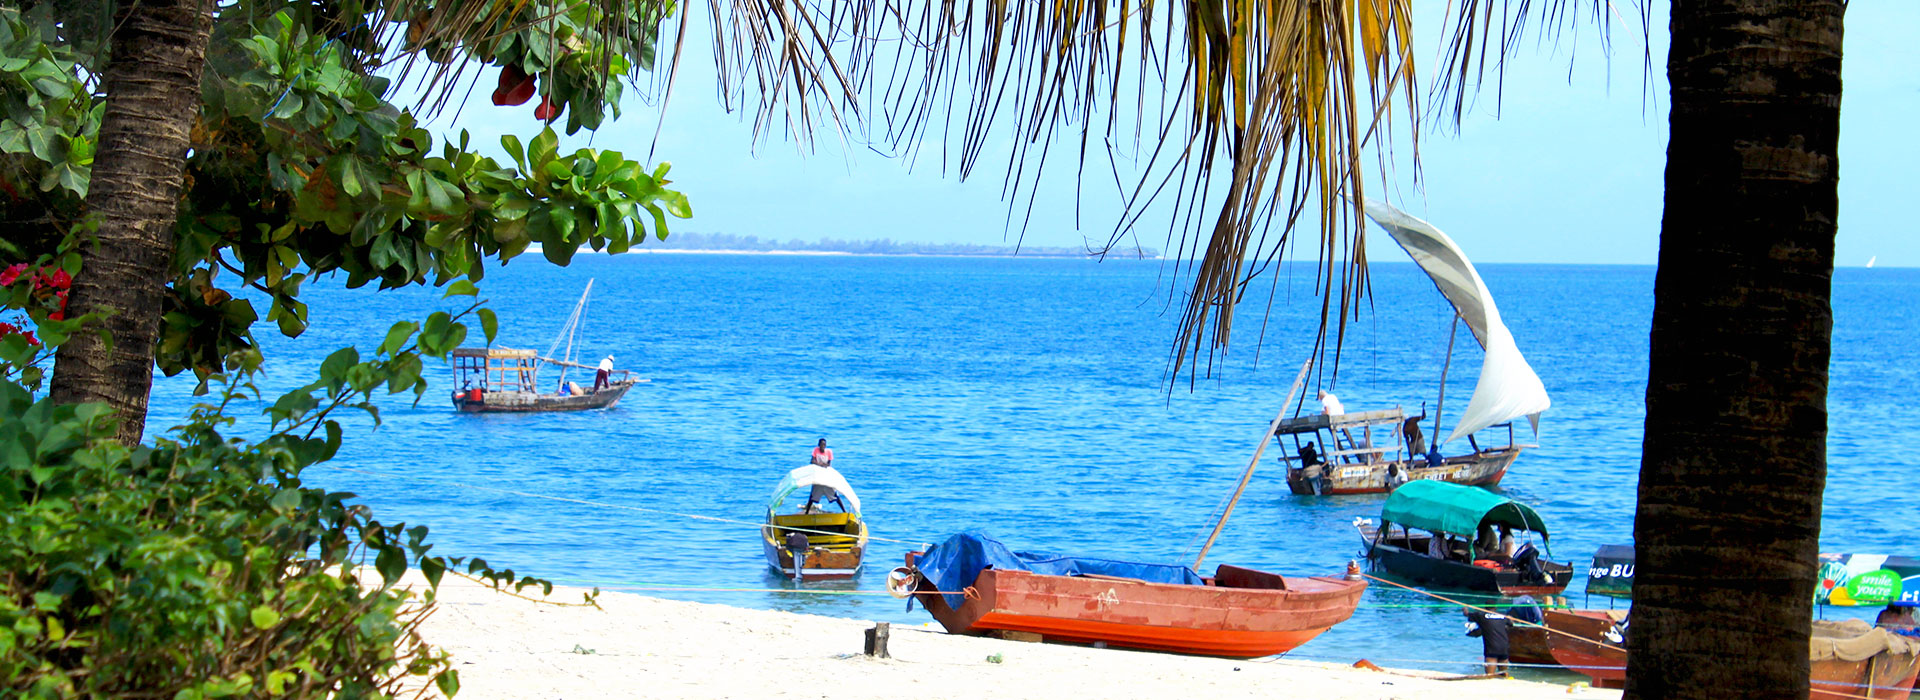 Zanzibar île de Tanzanie destination